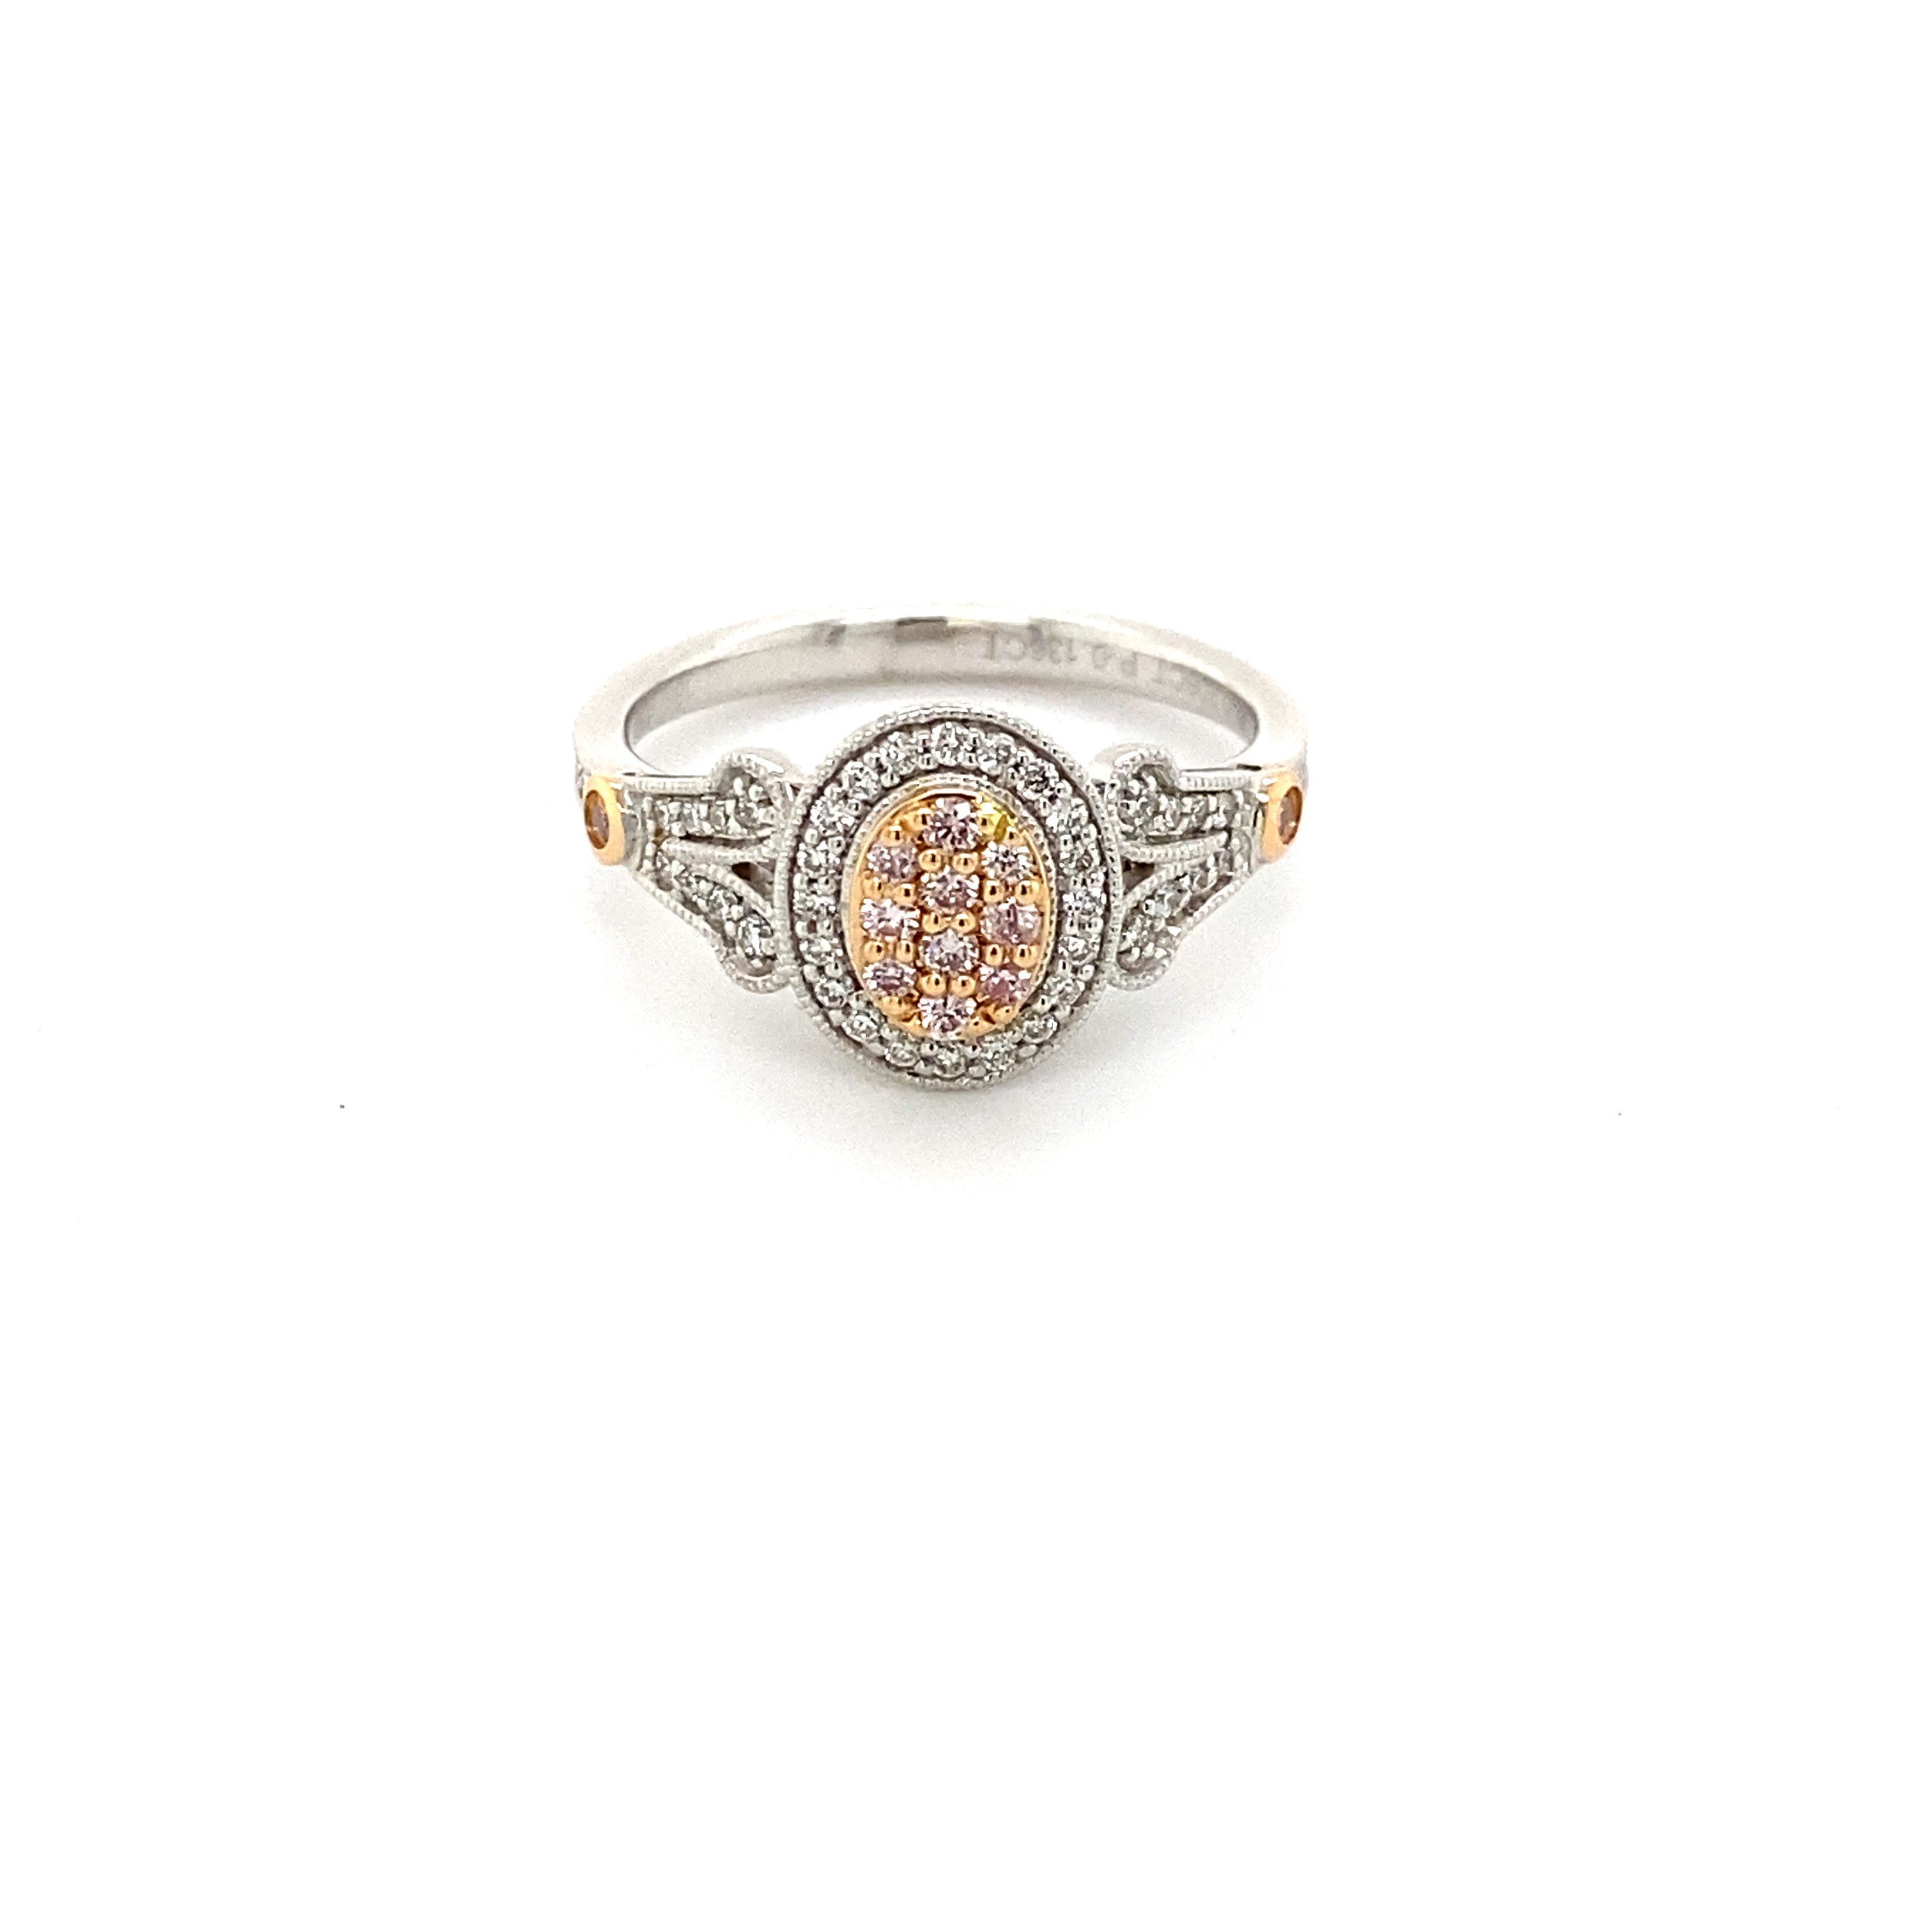 Australian Argyle Pink Diamond ring.